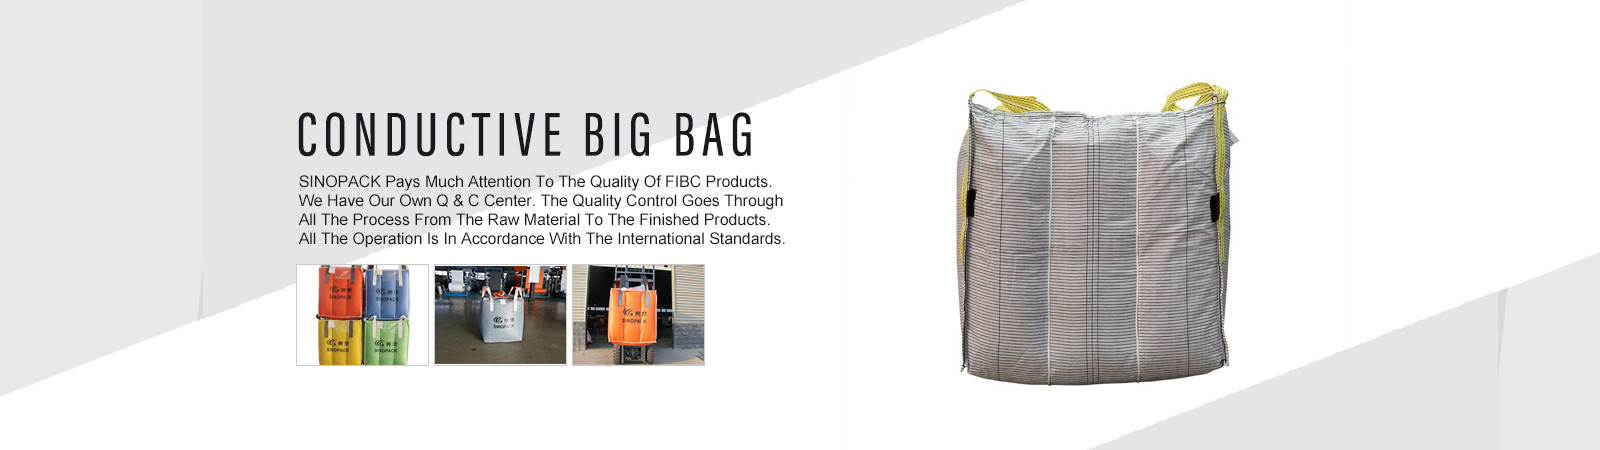 Kalite Big Bag FIBC Fabrika